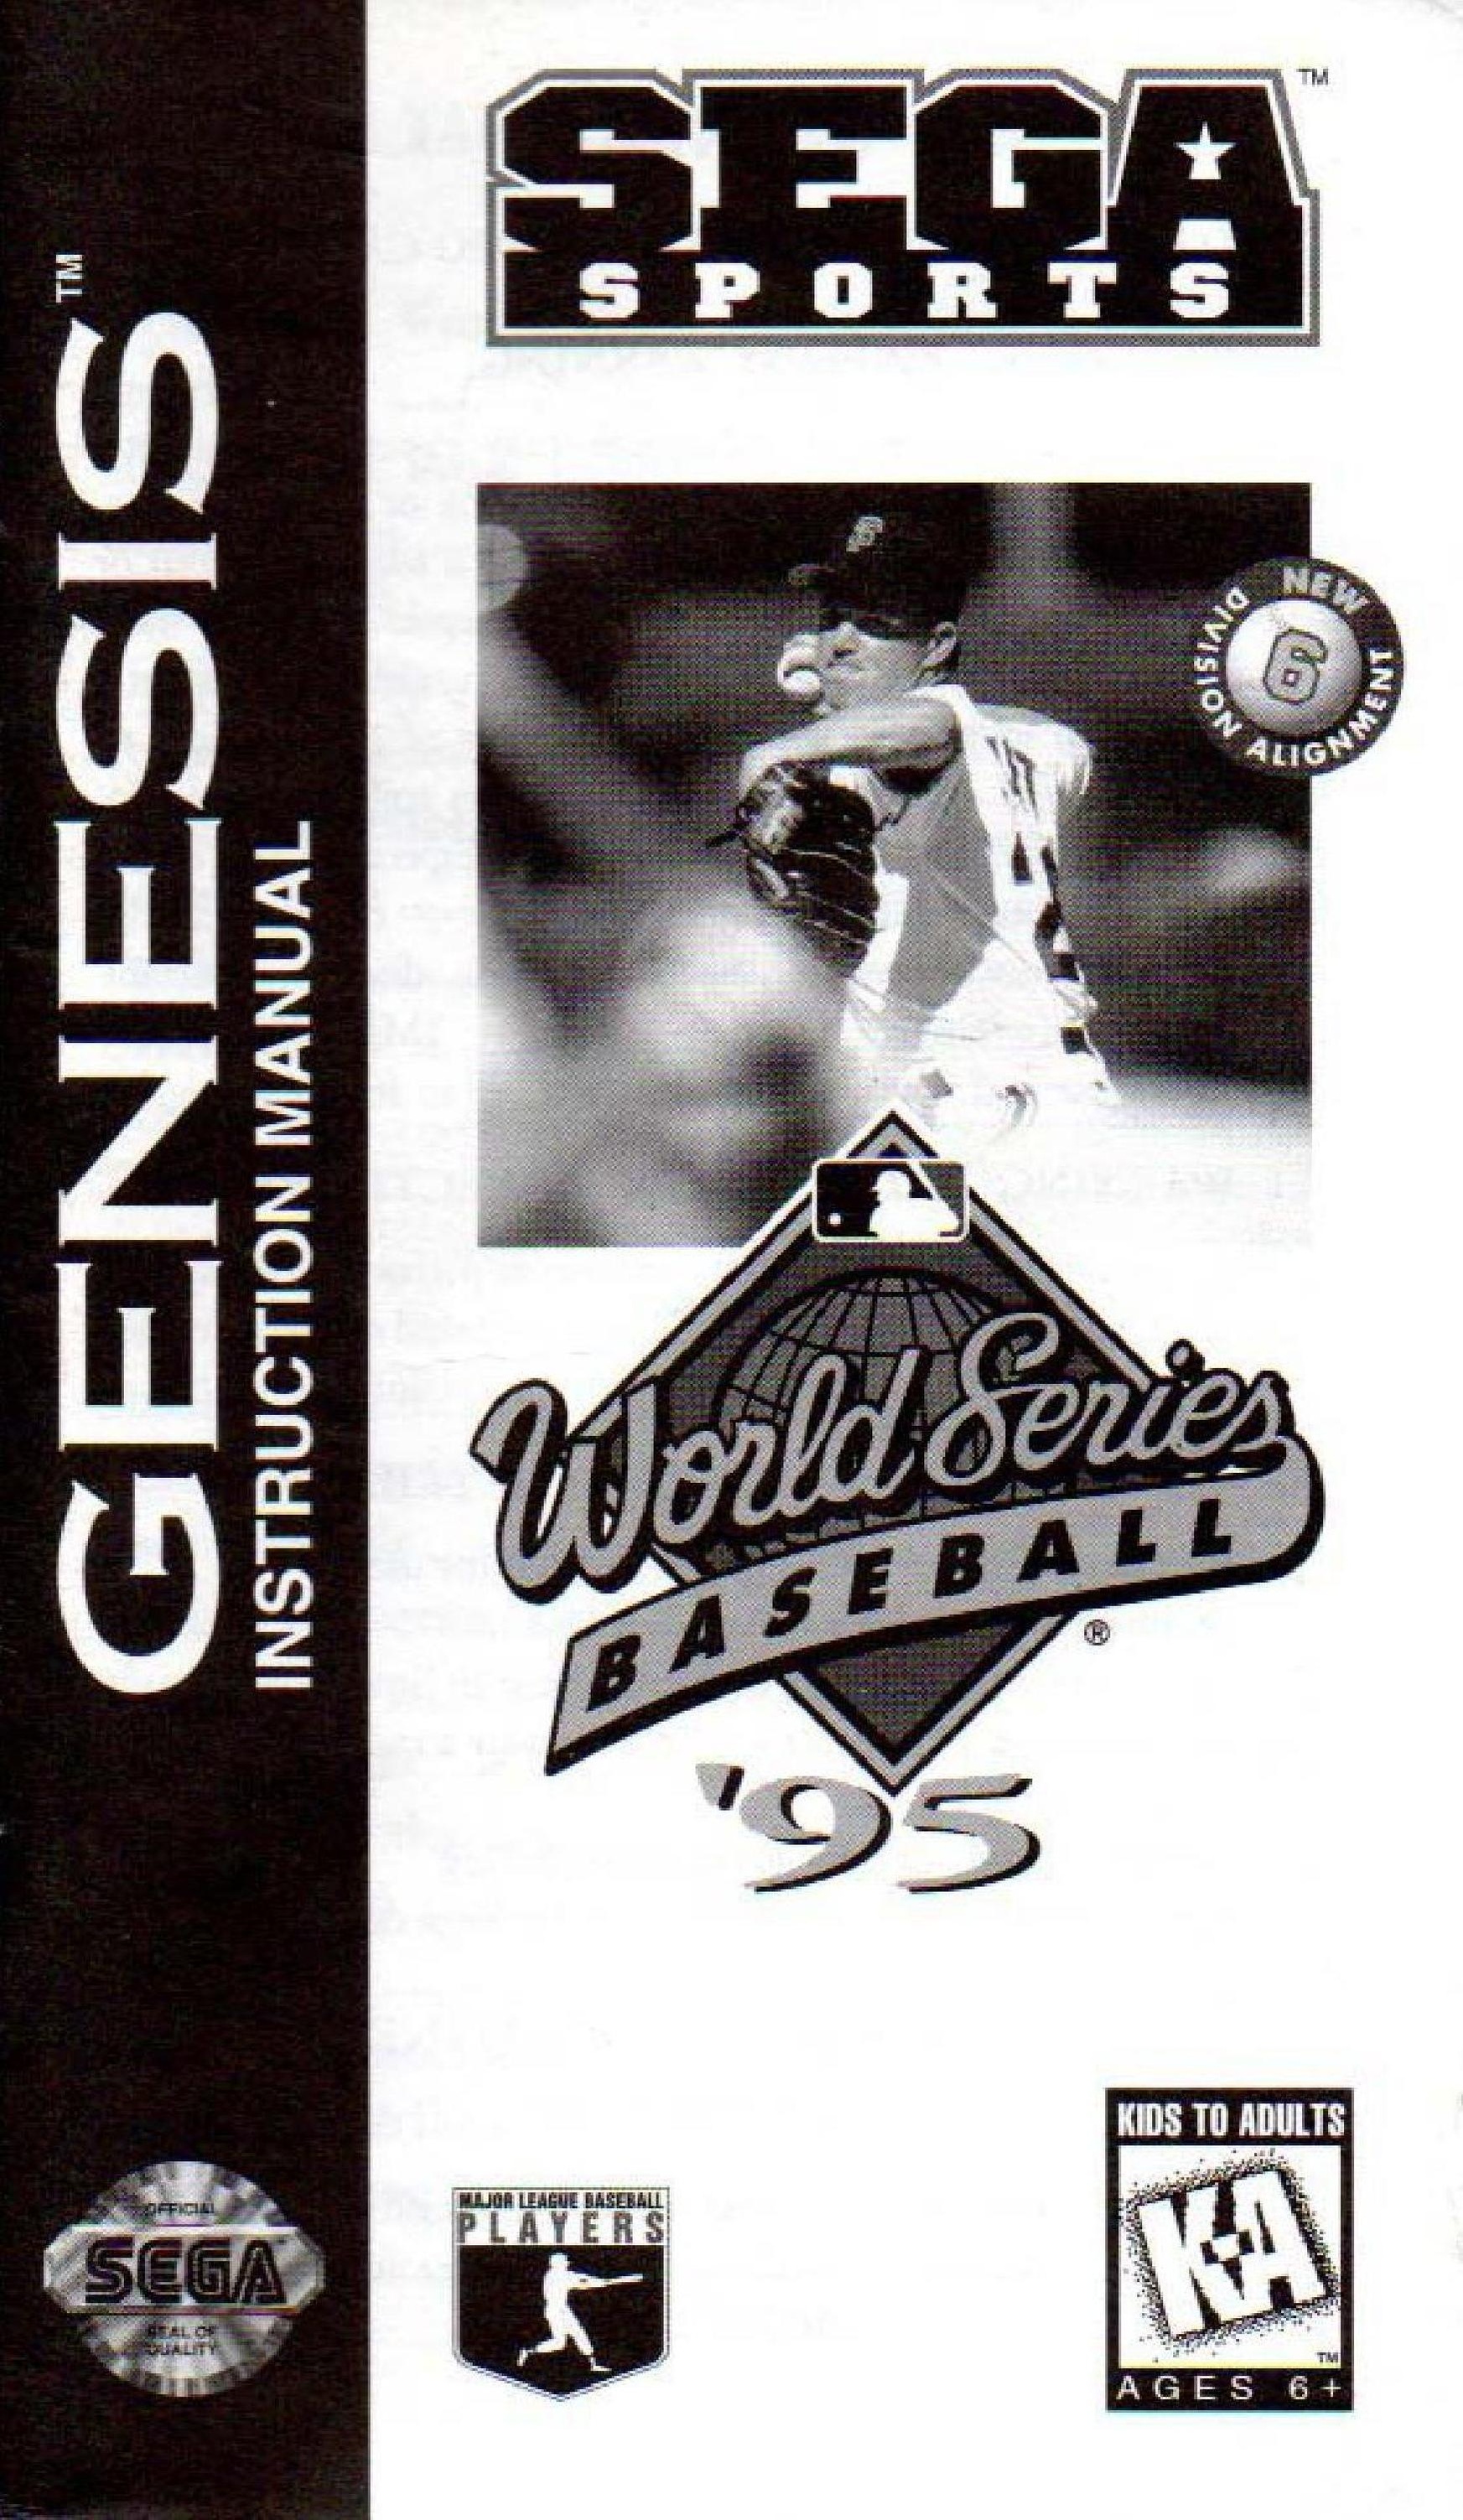 World Series Baseball 95 MD US Manual.pdf